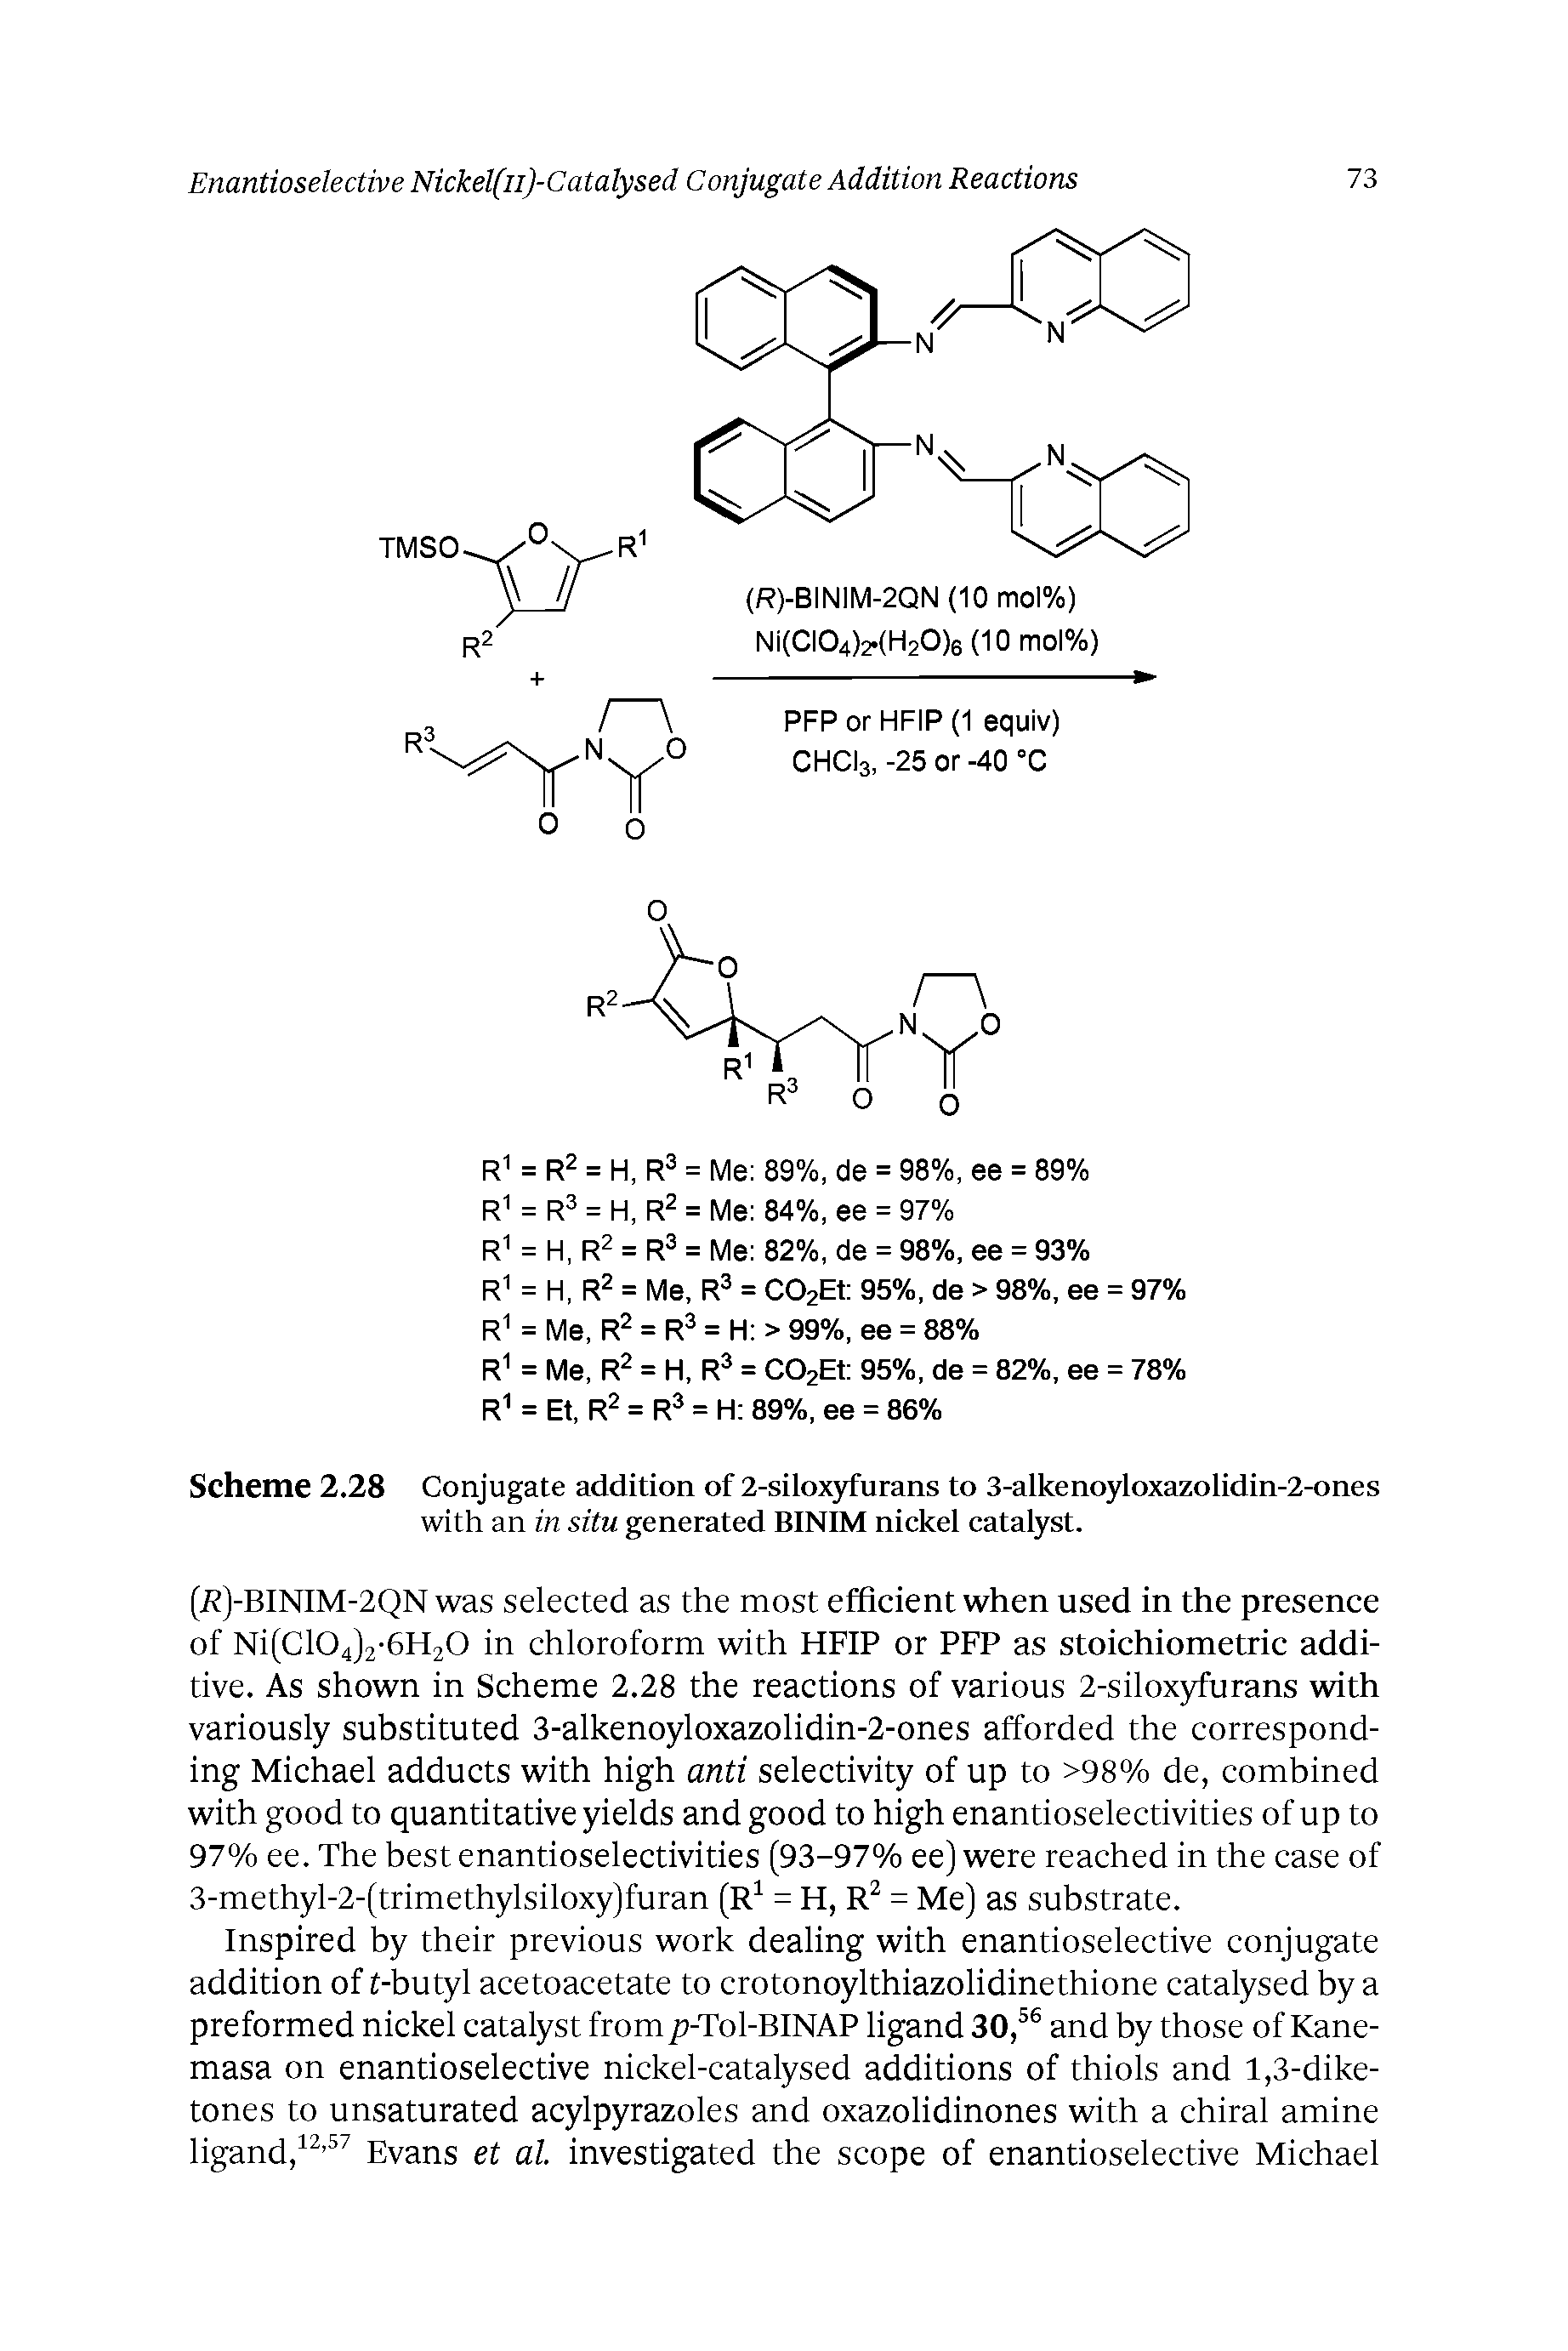 Scheme 2.28 Conjugate addition of 2-silox3rfurans to 3-alkenoyloxazolidin-2-ones...